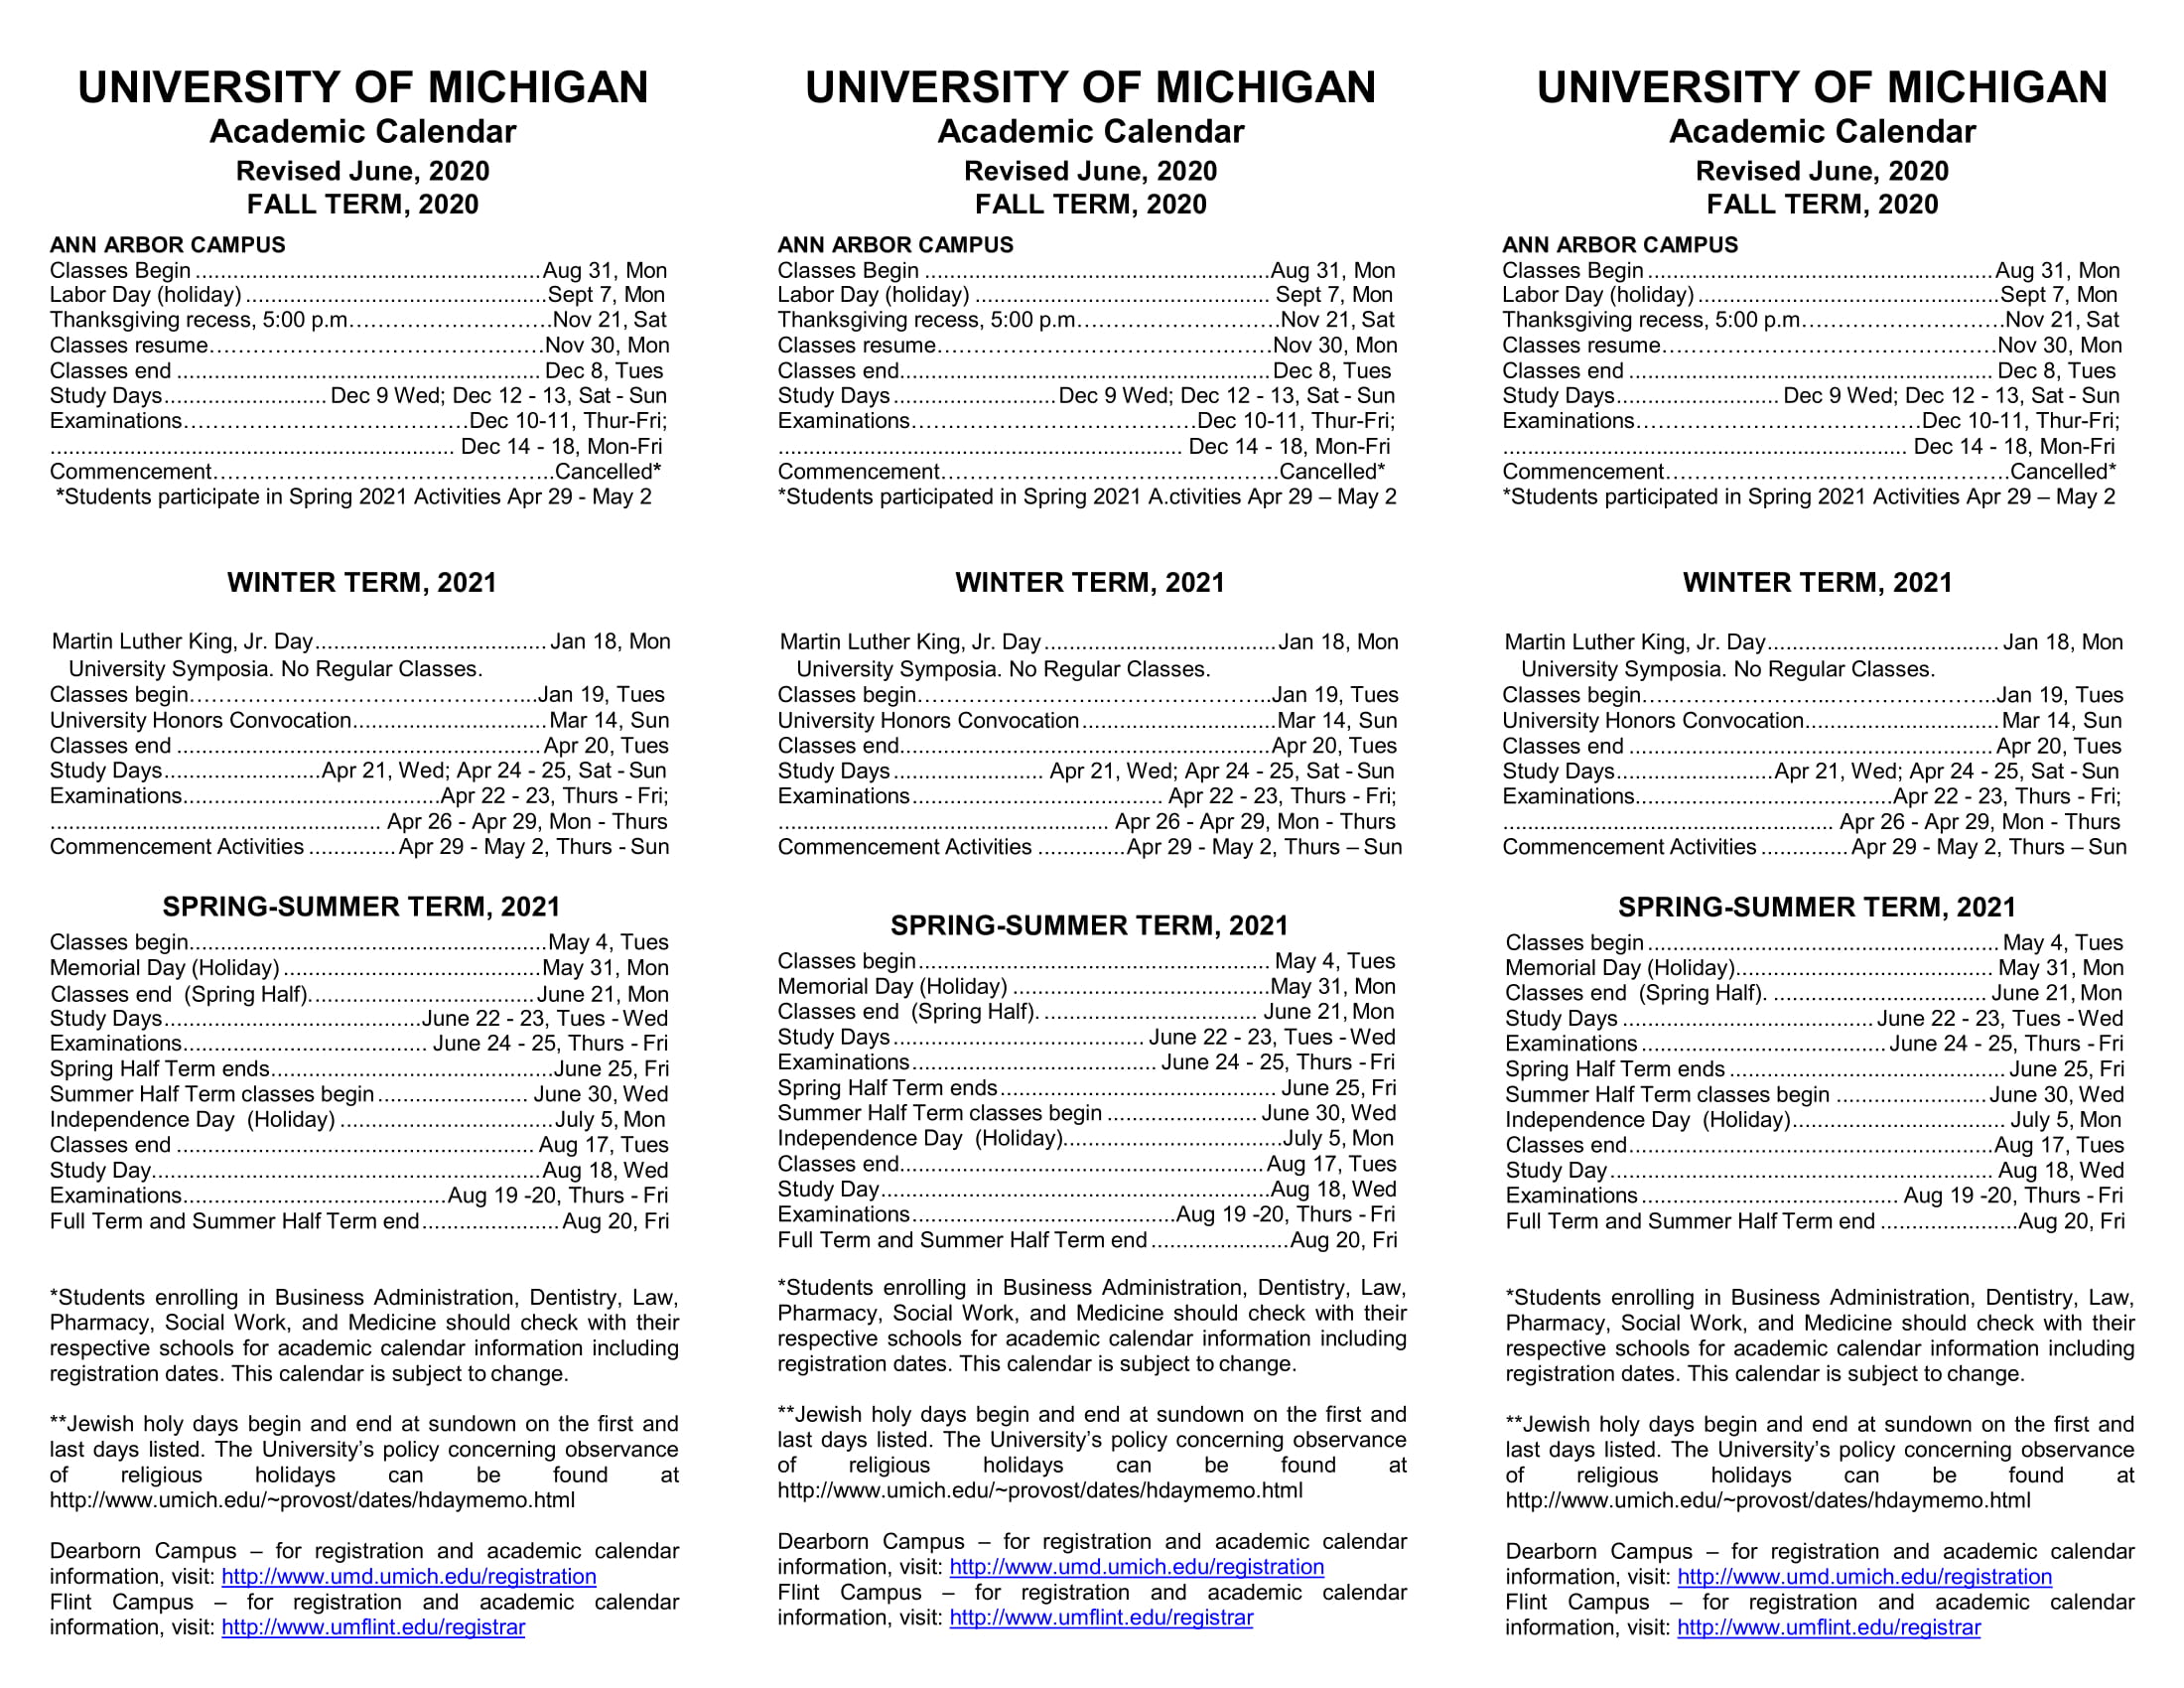 University Of Michigan Holiday Calendar Archives Us School Calendar